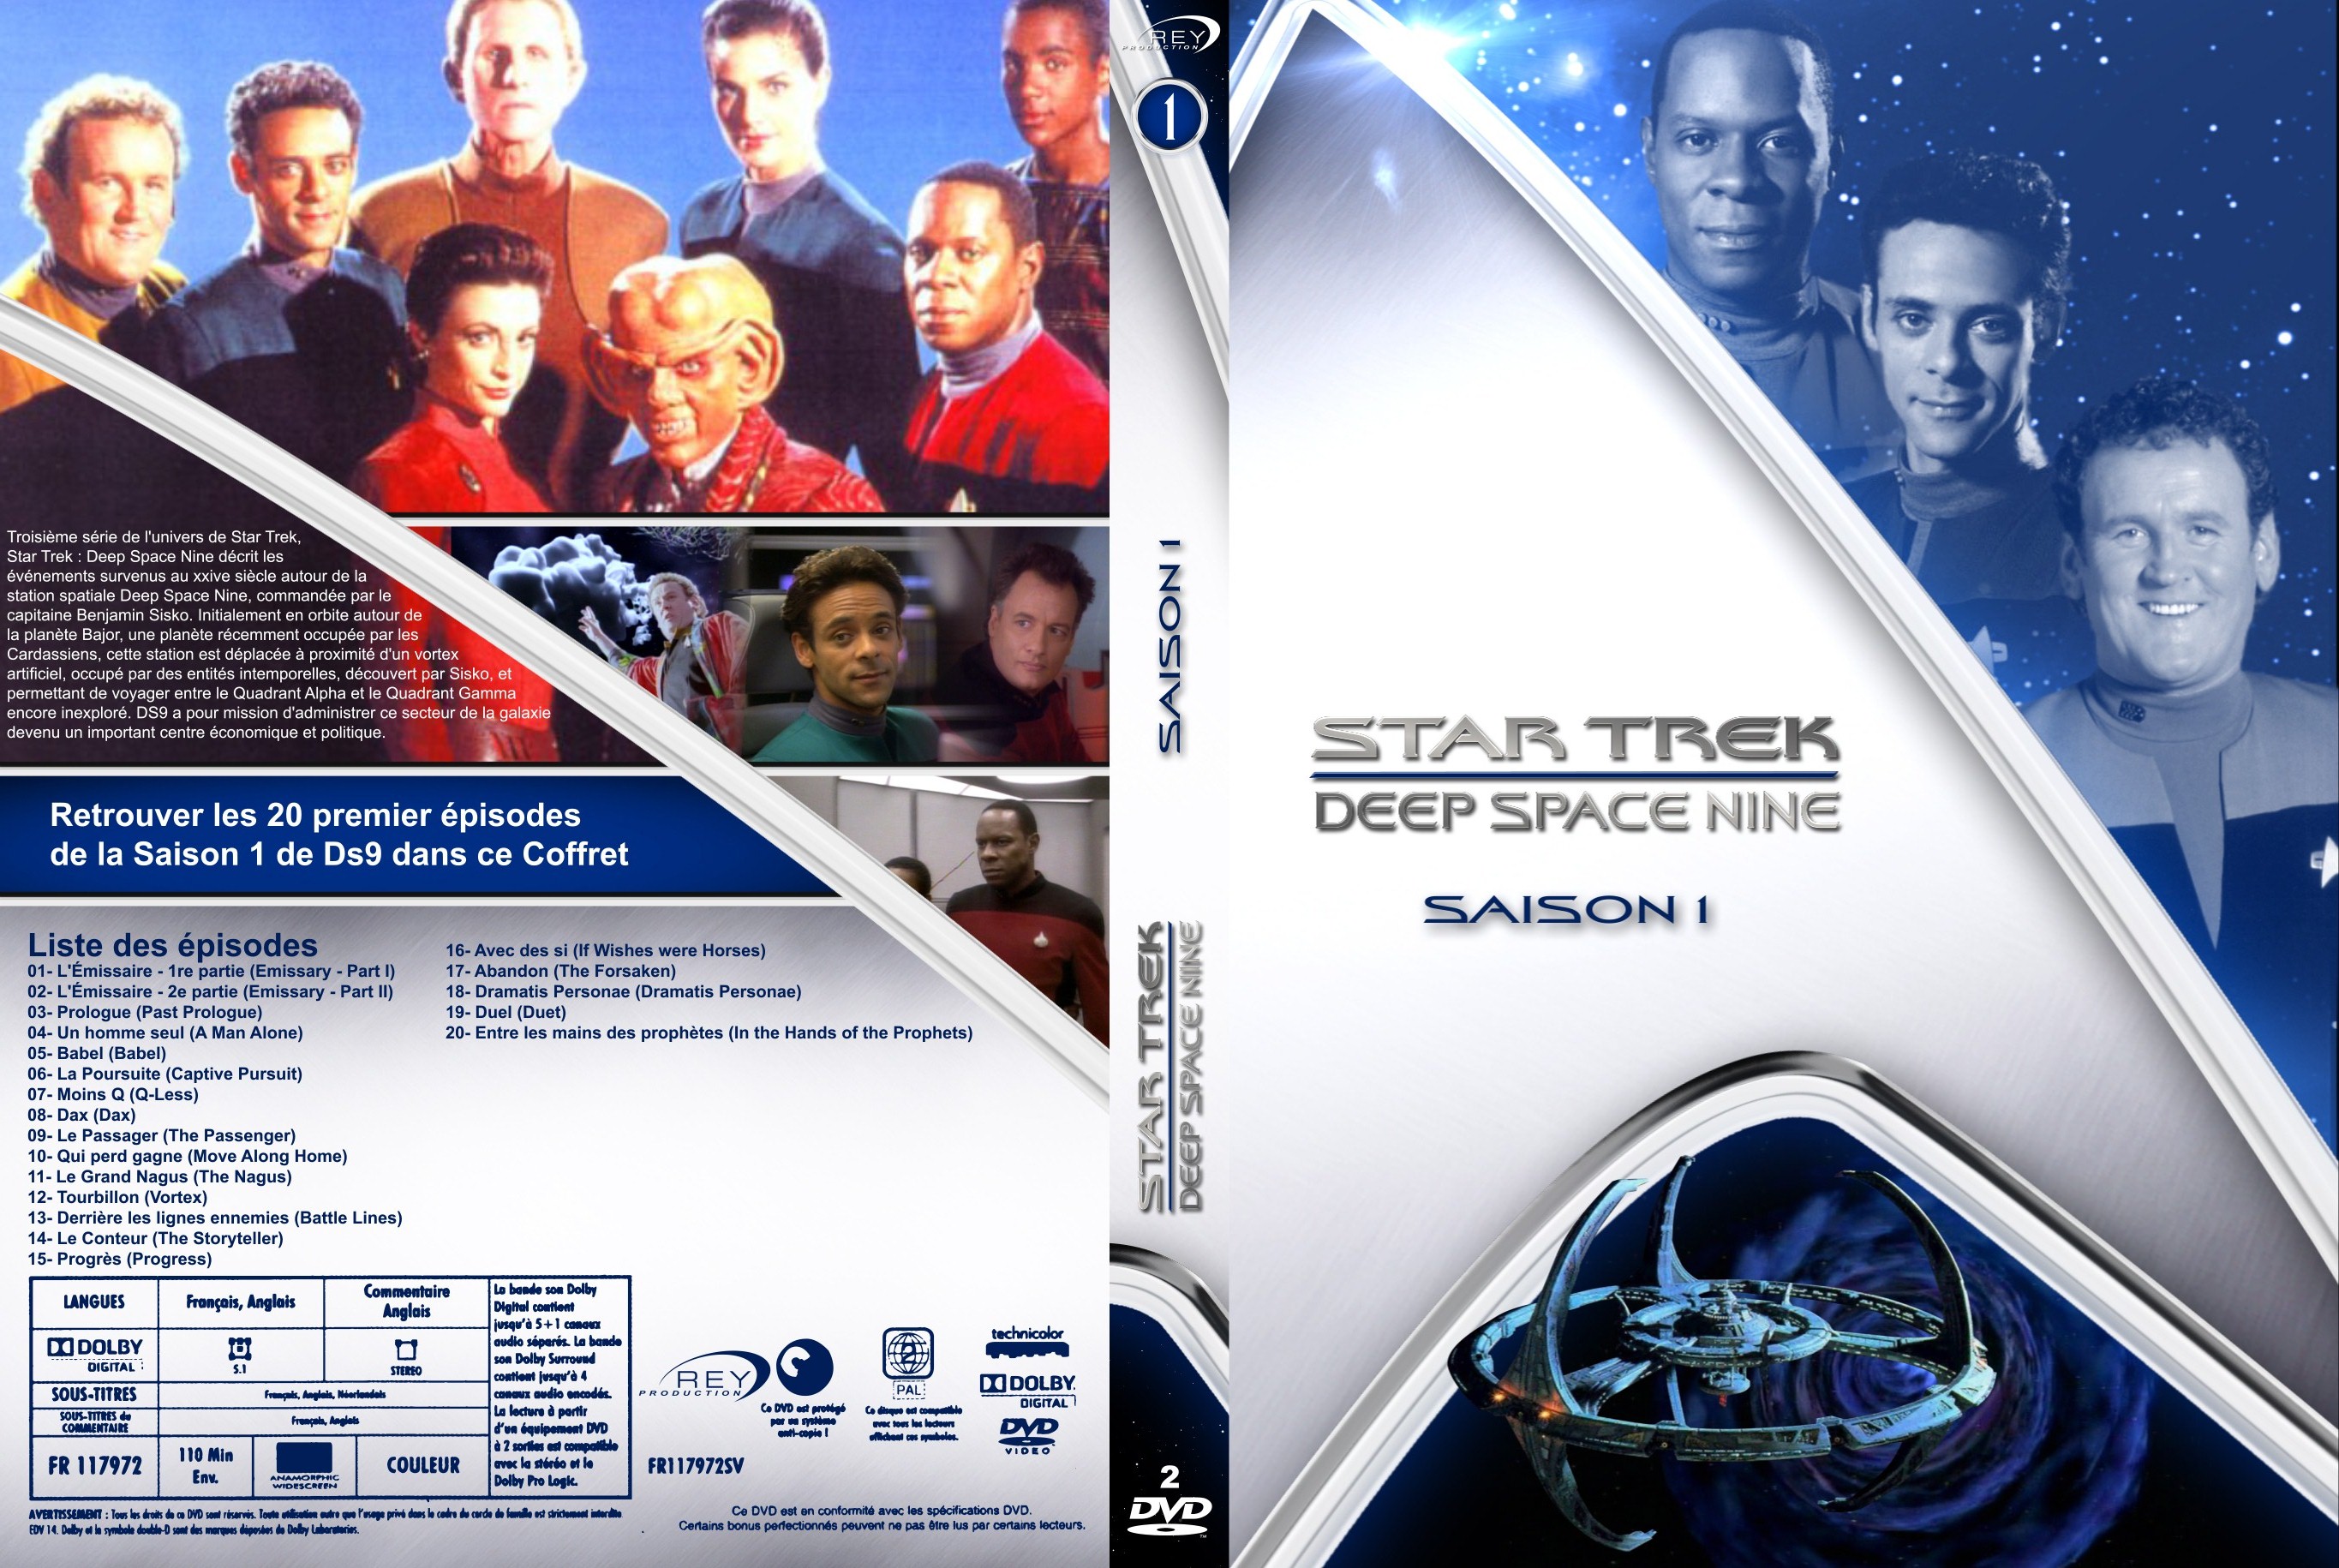 Jaquette DVD Star Trek Deep space nine Saison 1 custom